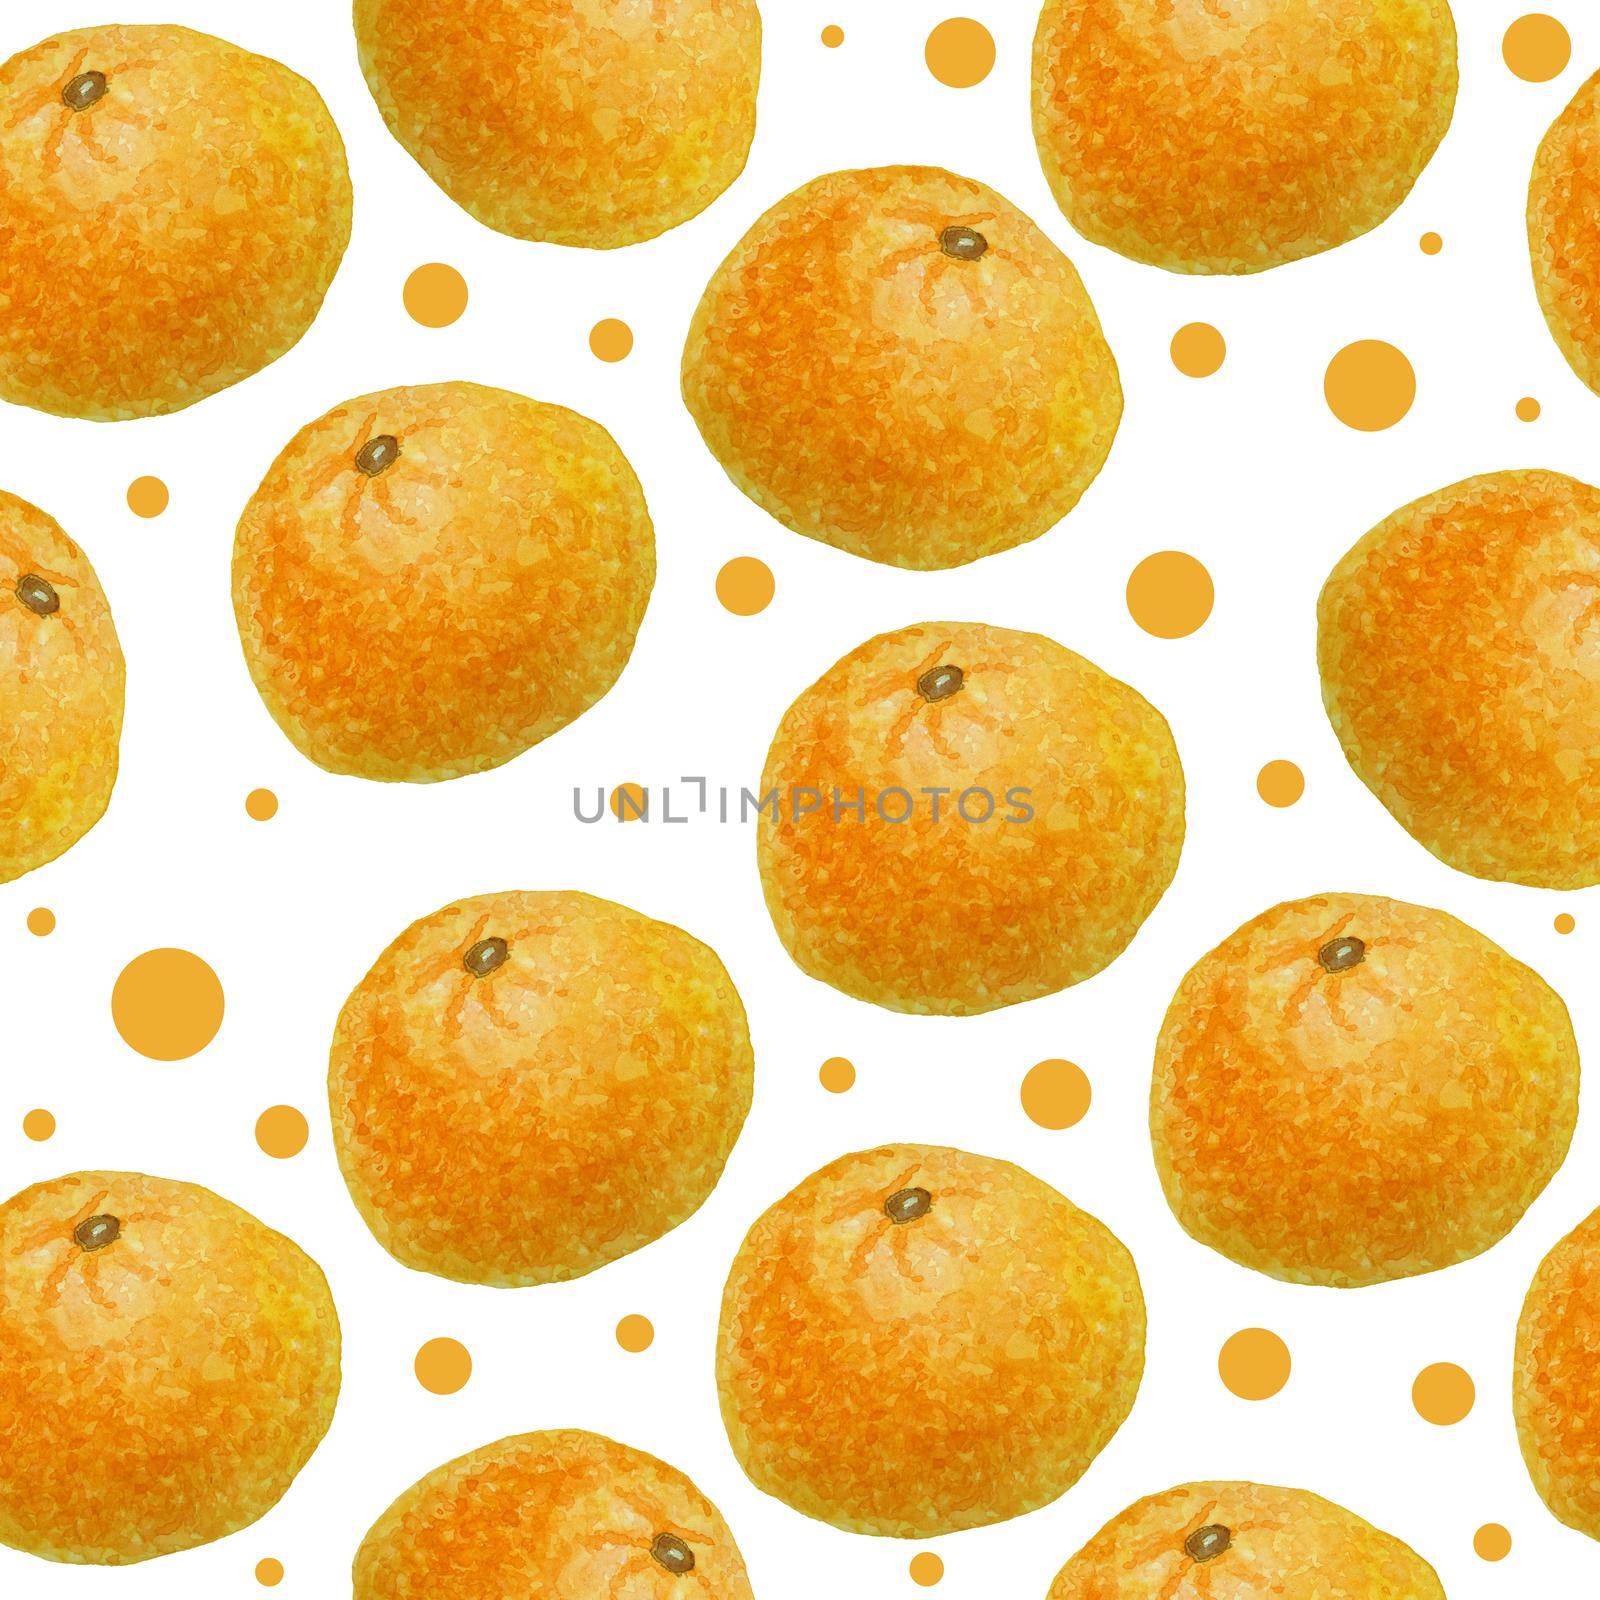 Watercolor hand drawn seamless pattern illustration of bright orange tangerine mandarine citrus fruits with polka dot circles background. For food organic vegetarian labels, packaging. Natural trendy design